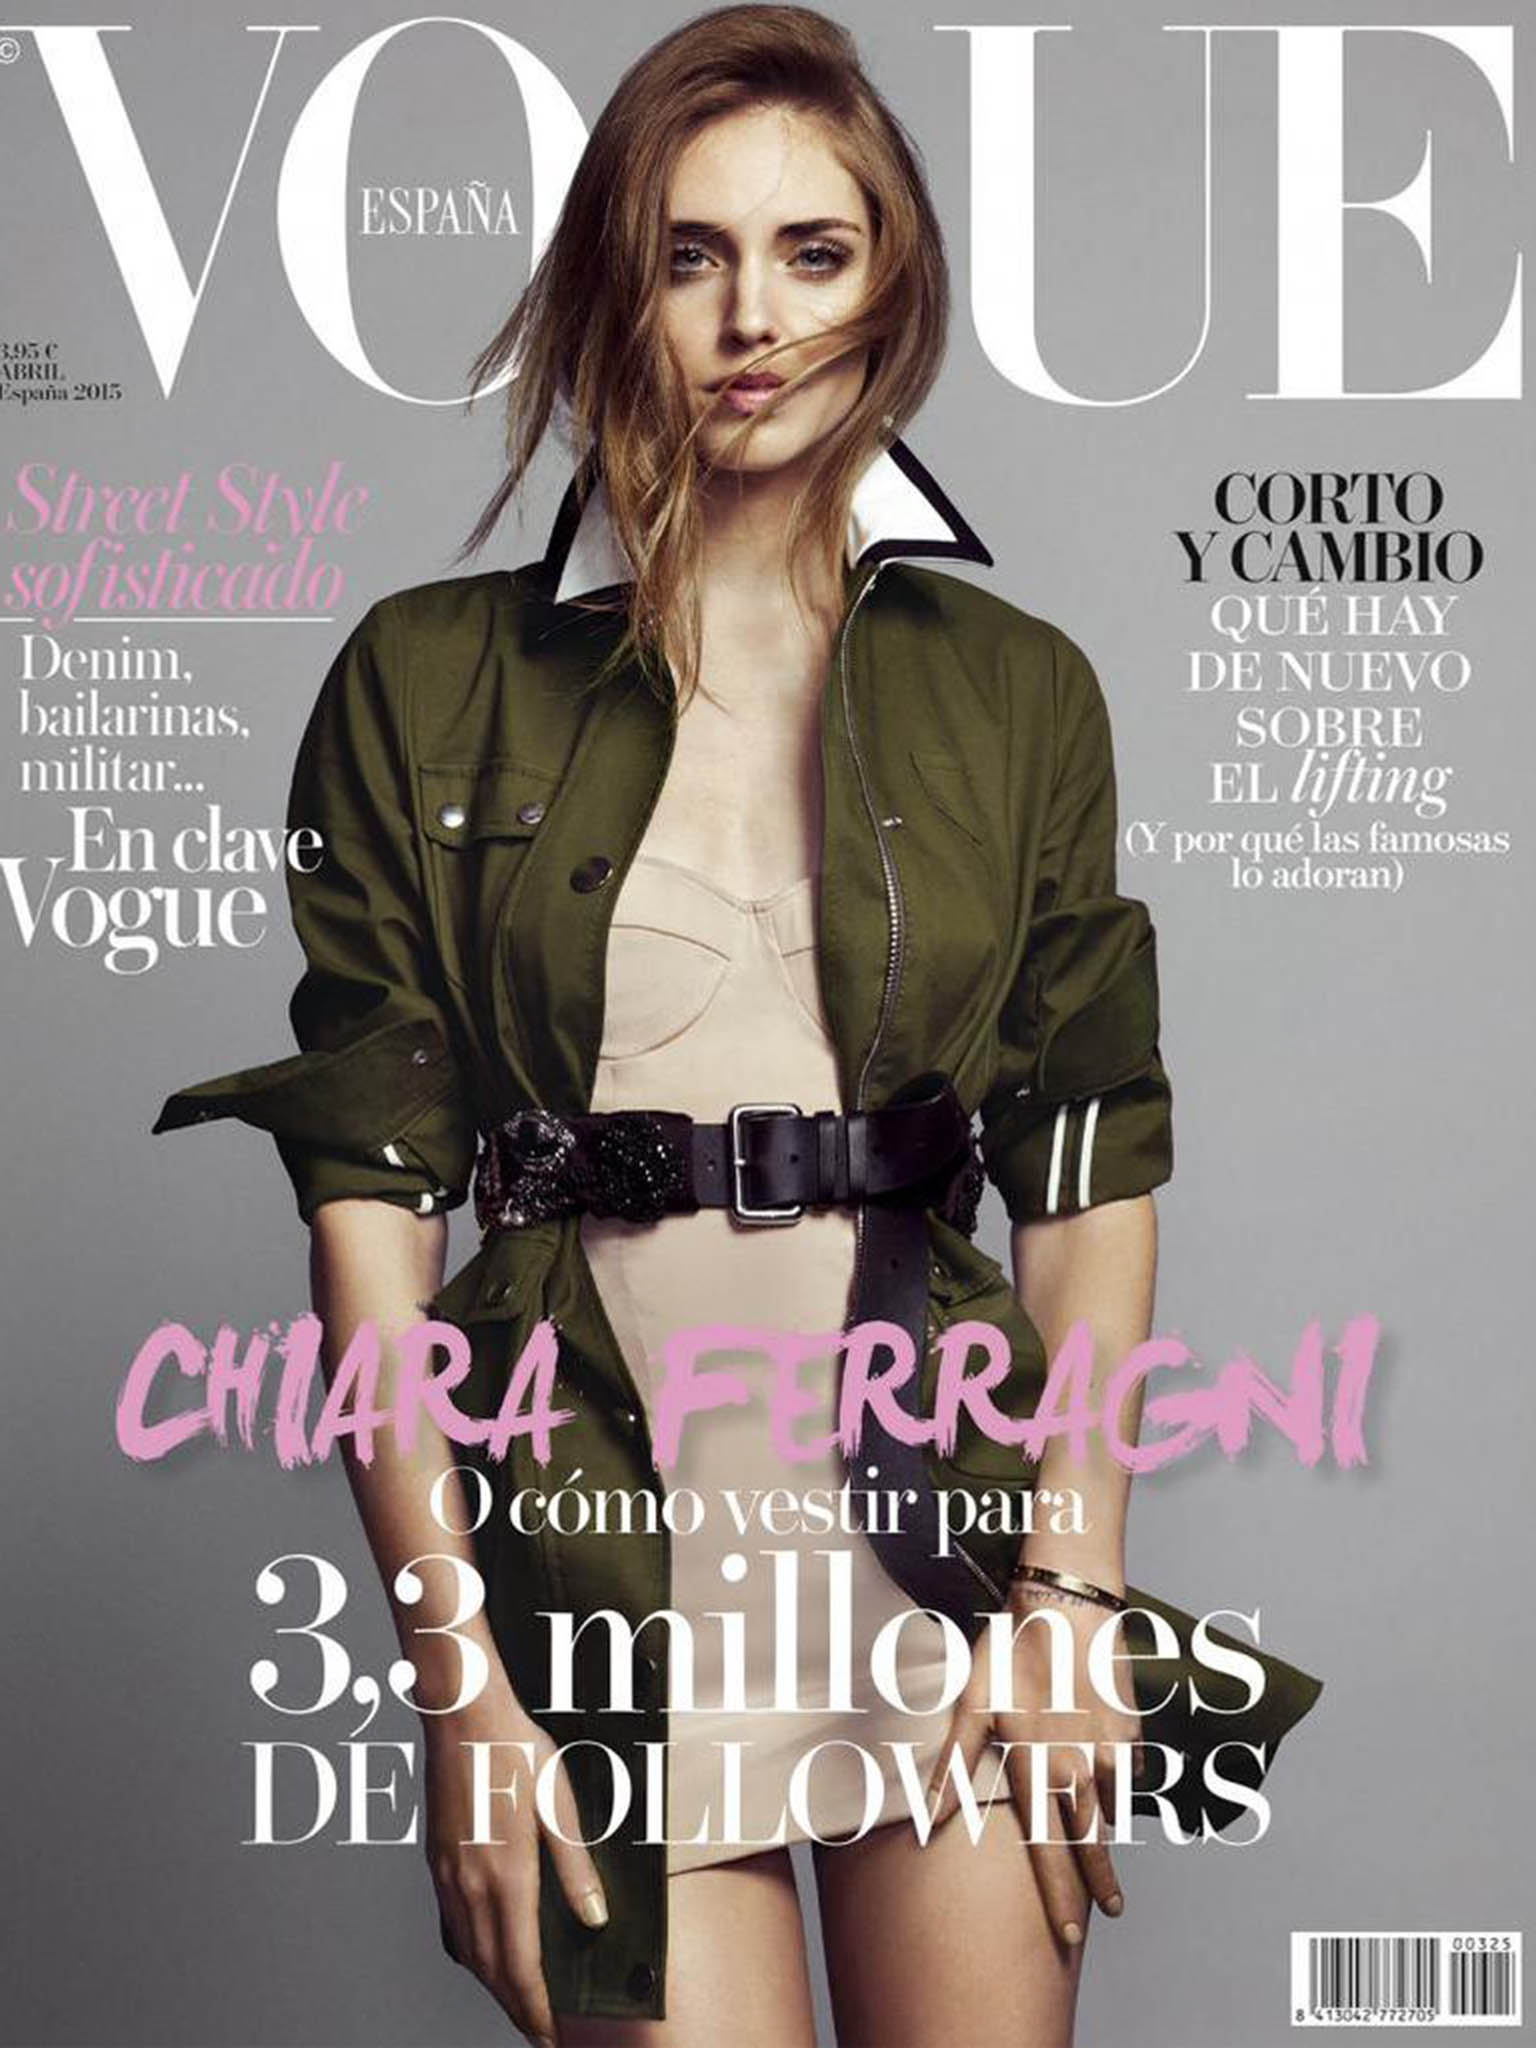 Blogger Chiara Ferragni was even featured the cover of Vogue’s Spanish edition